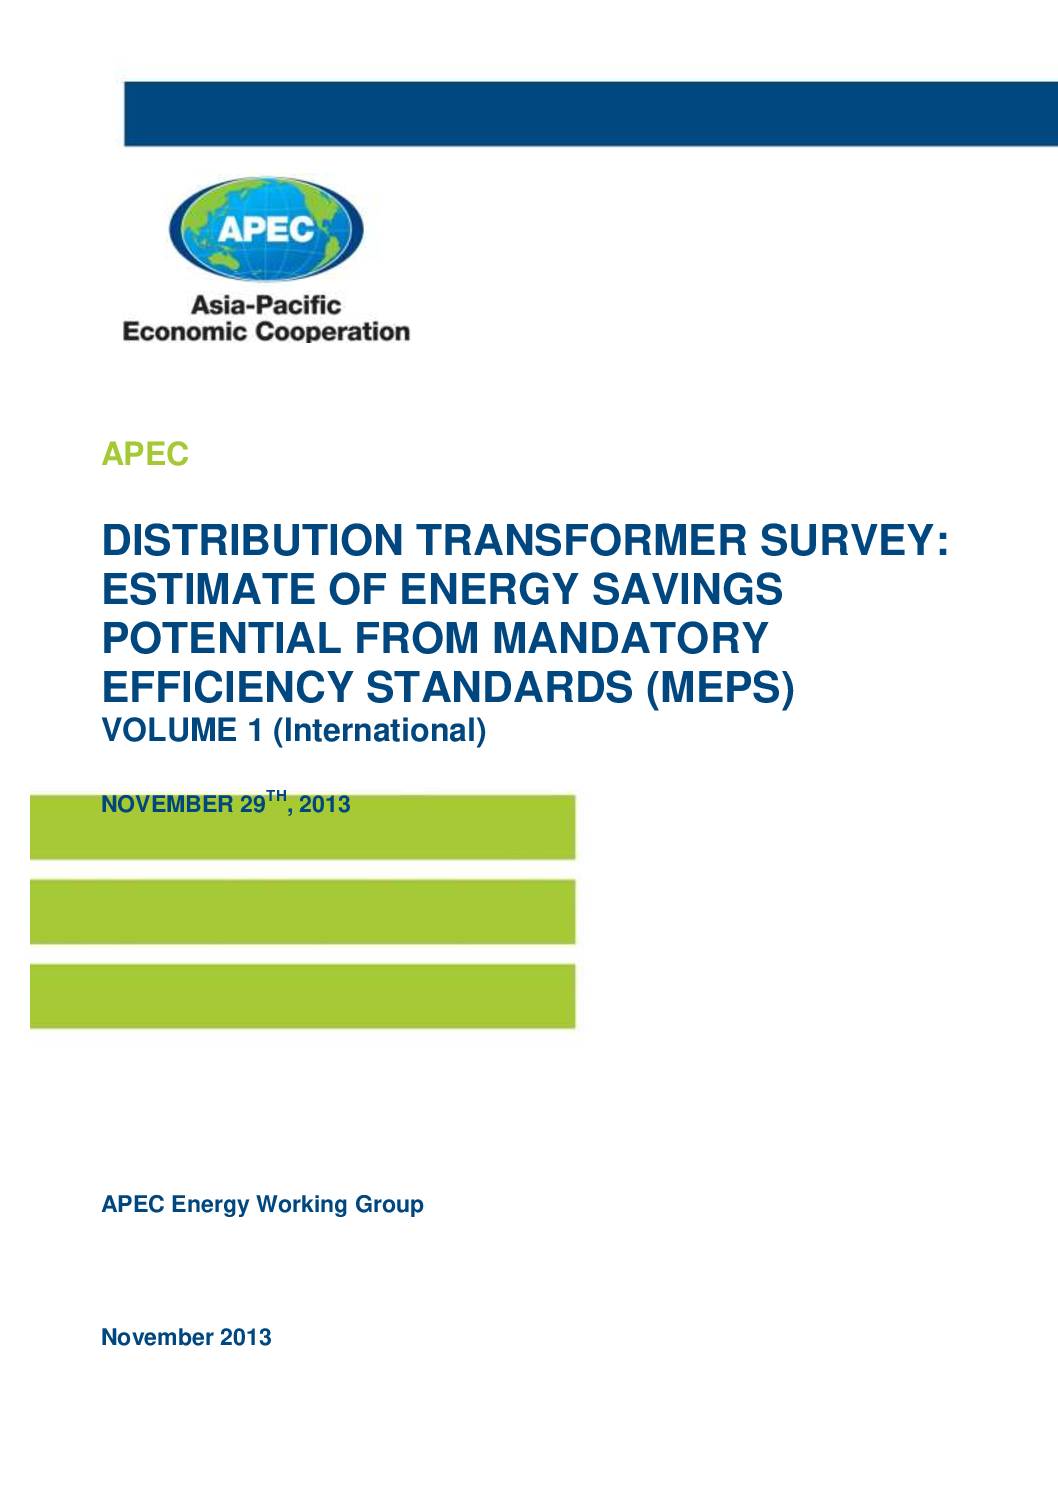 Distribution Transformer Survey: Estimate of Energy Savings Potential from Mandatory Efficiency Standards Volume 1 (International)